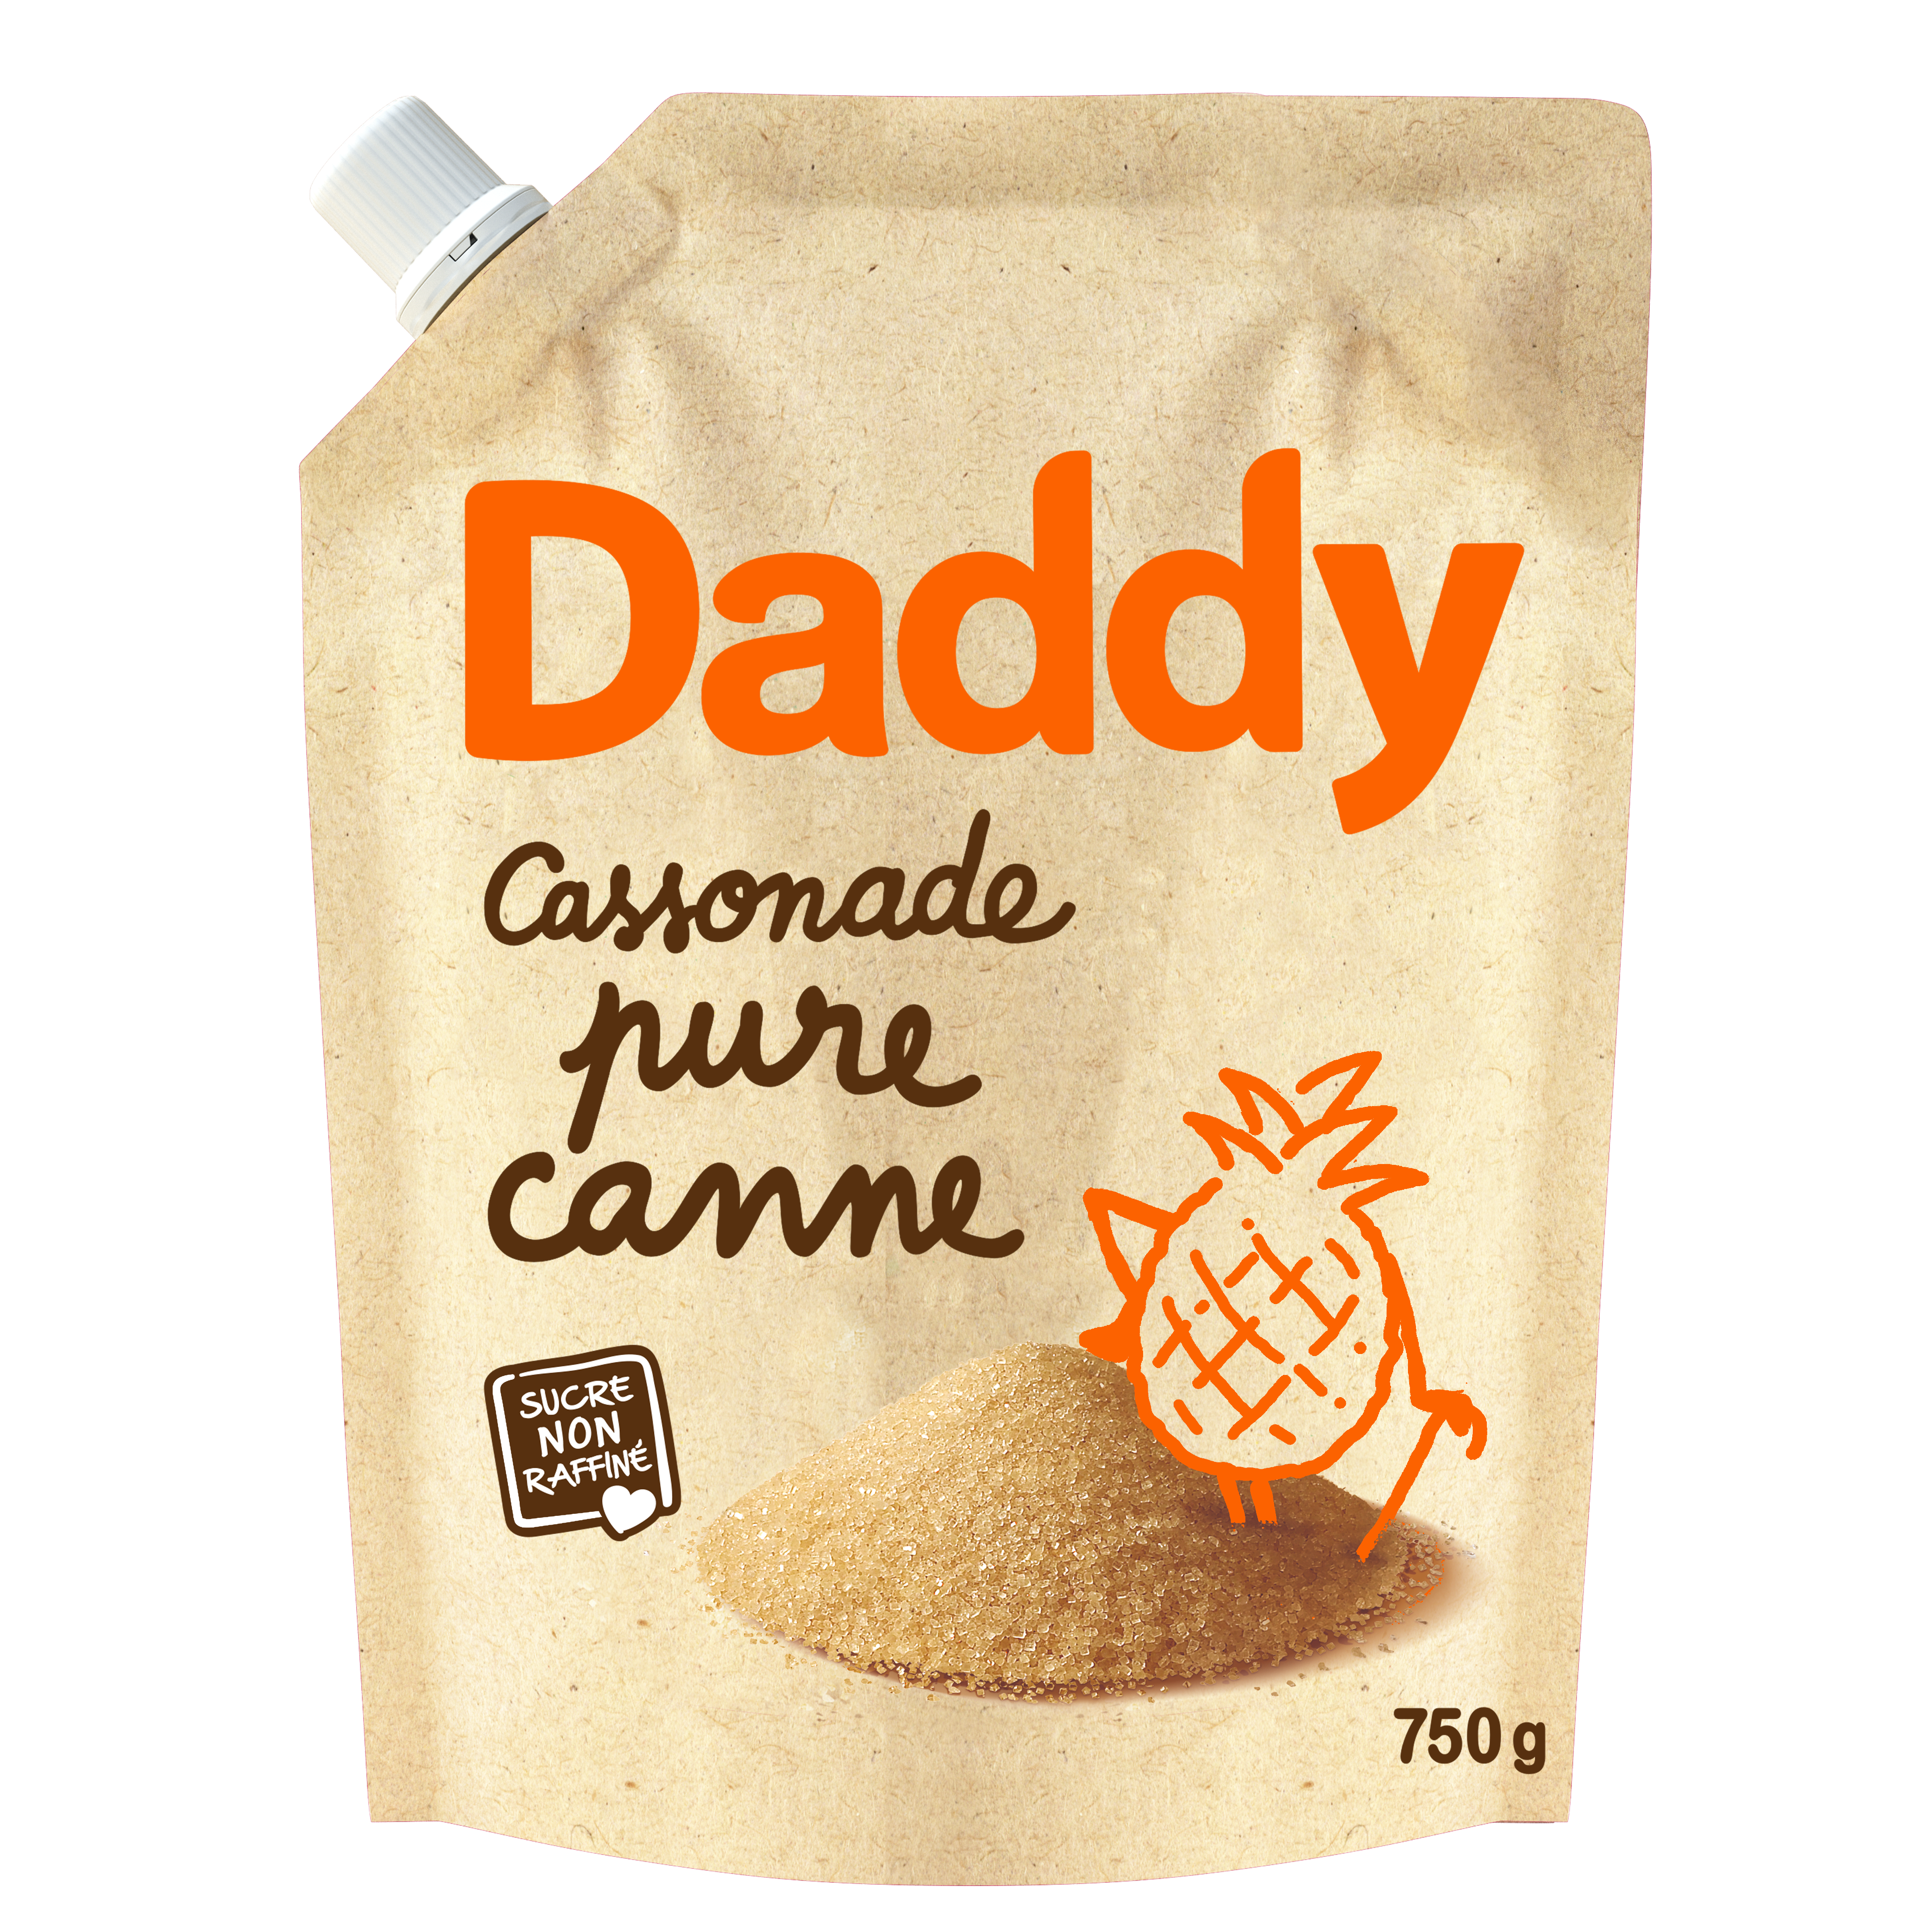 Daddy - Cassonade pure canne kraft